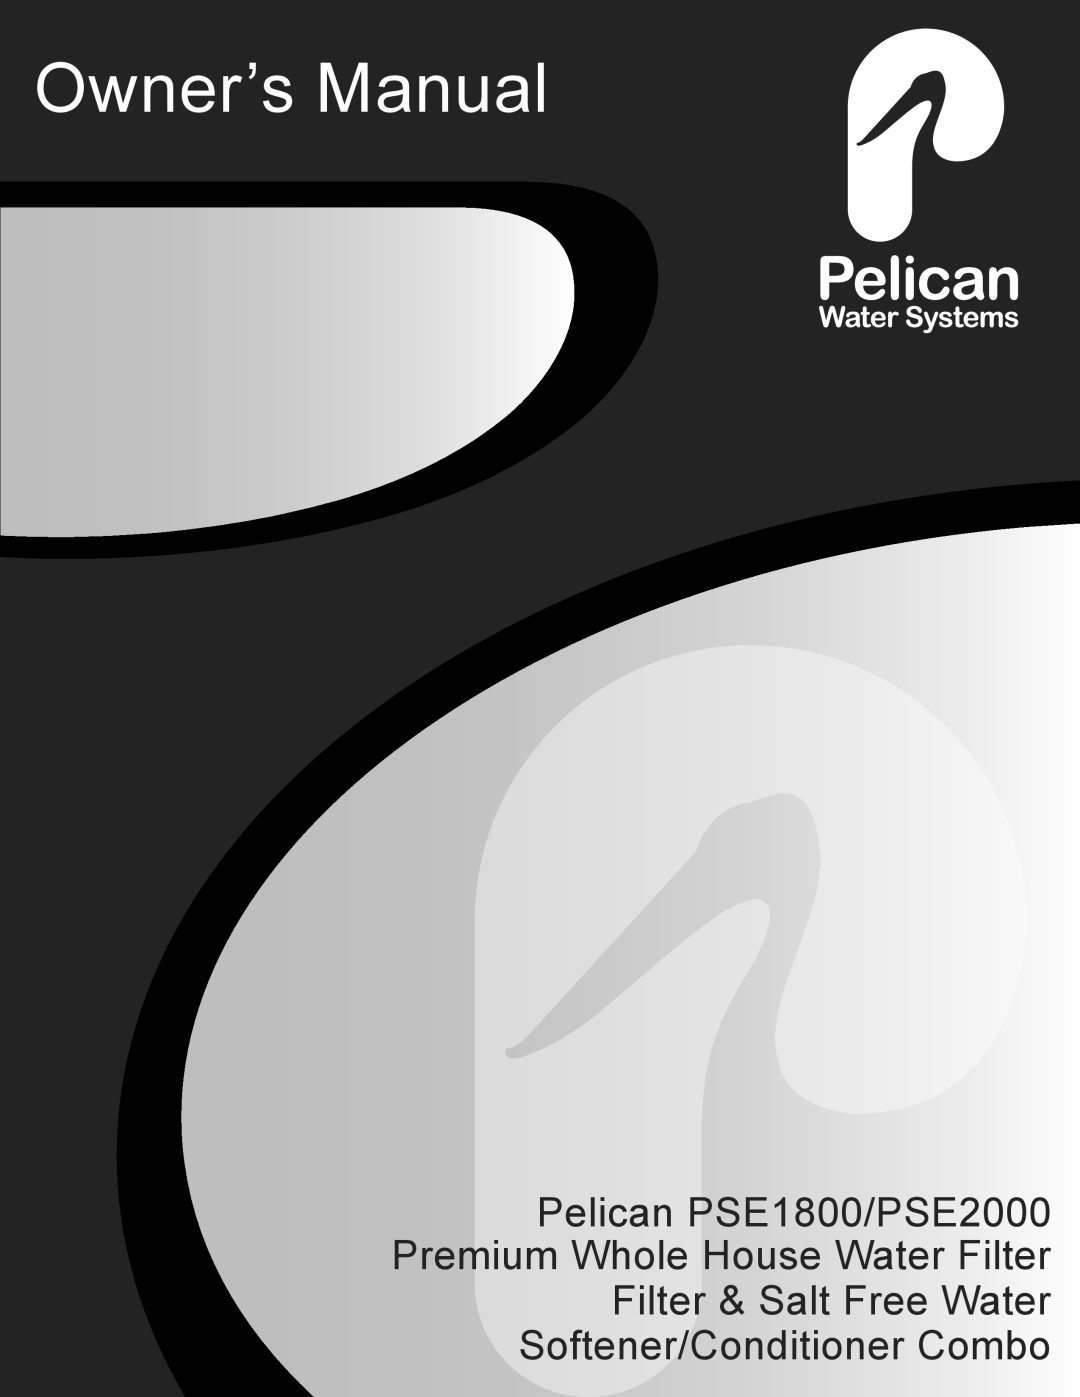 Pelican owner manual Pelican PSE1800/PSE2000, Premium Whole House Water Filter, Filter & Salt Free Water 